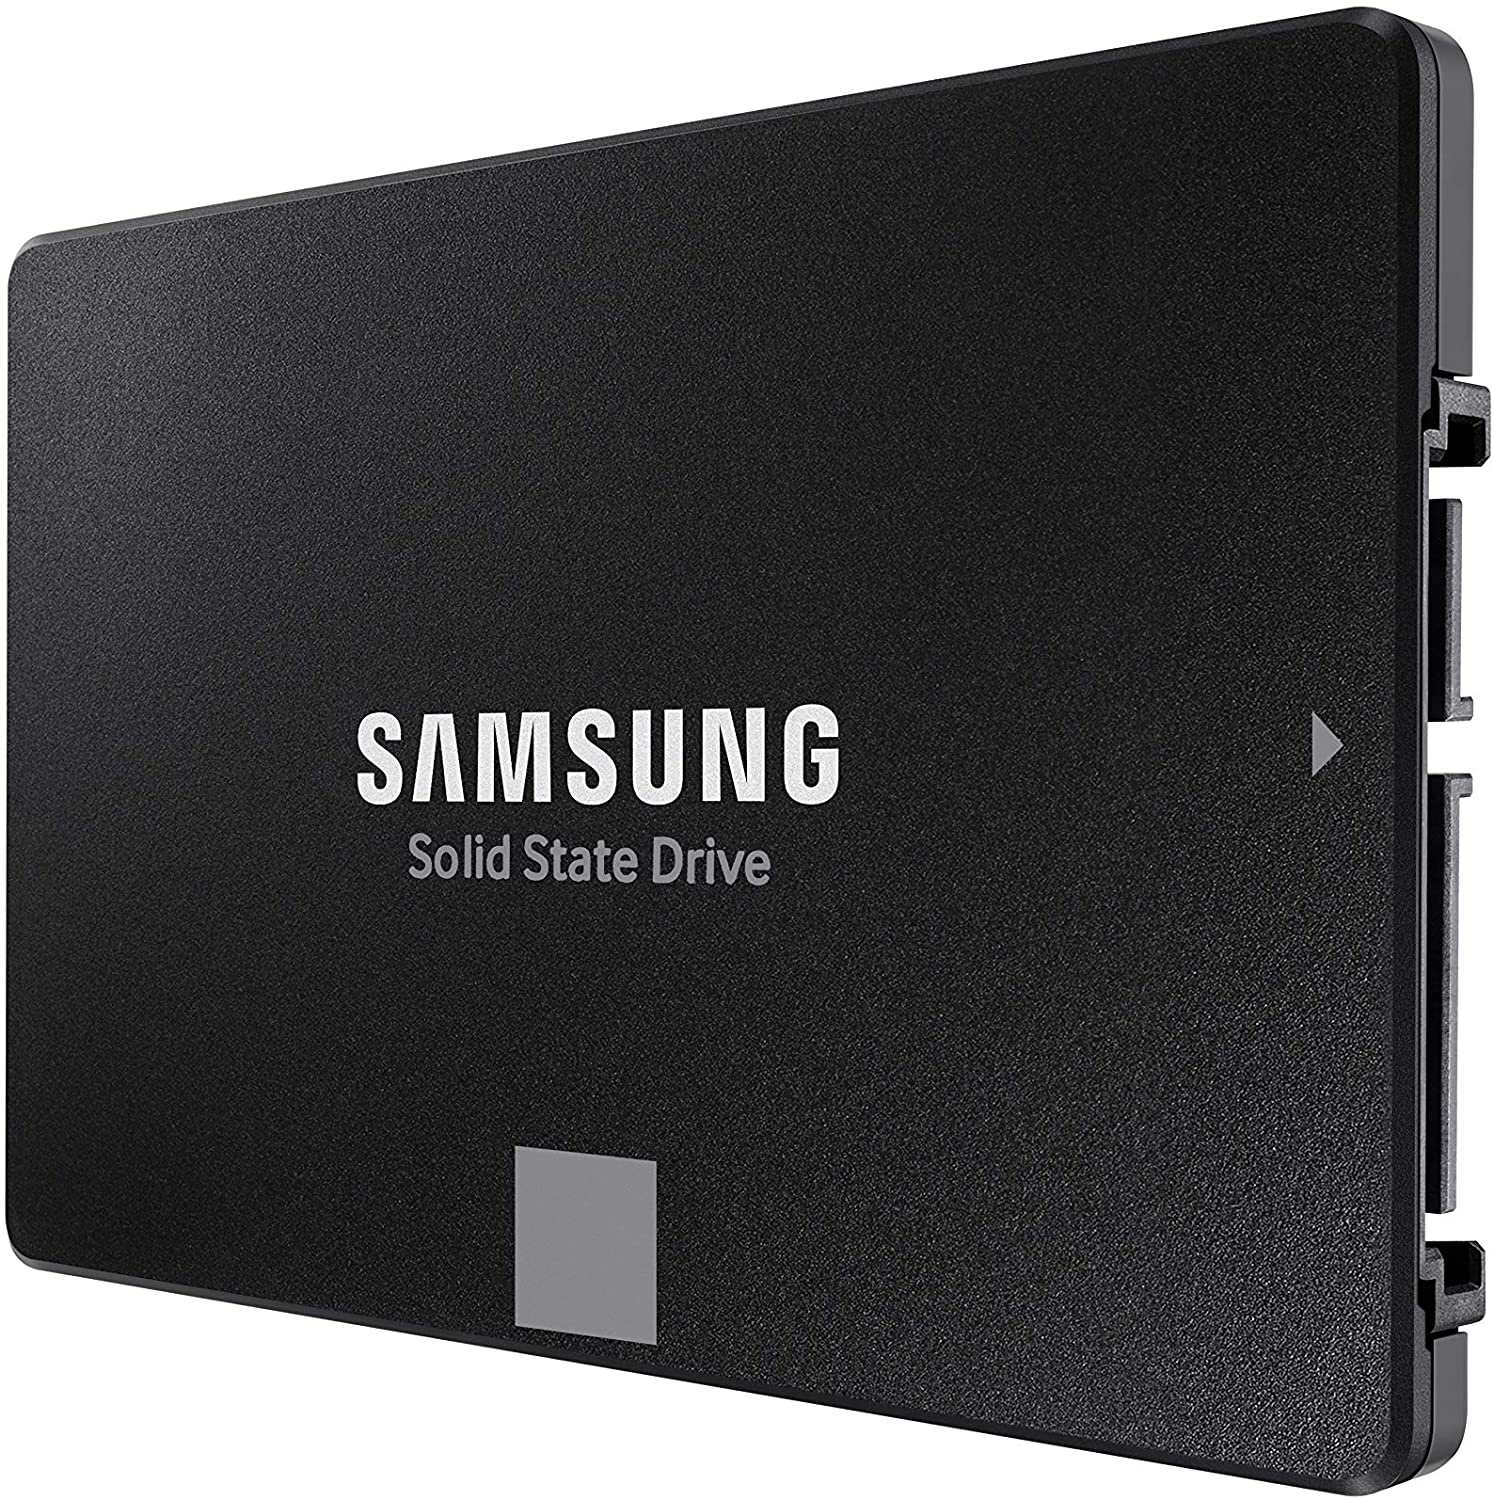 SAMSUNG 870 EVO SATA III SSD 2.5” Internal Solid State Hard Drive, MZ-77E/BW